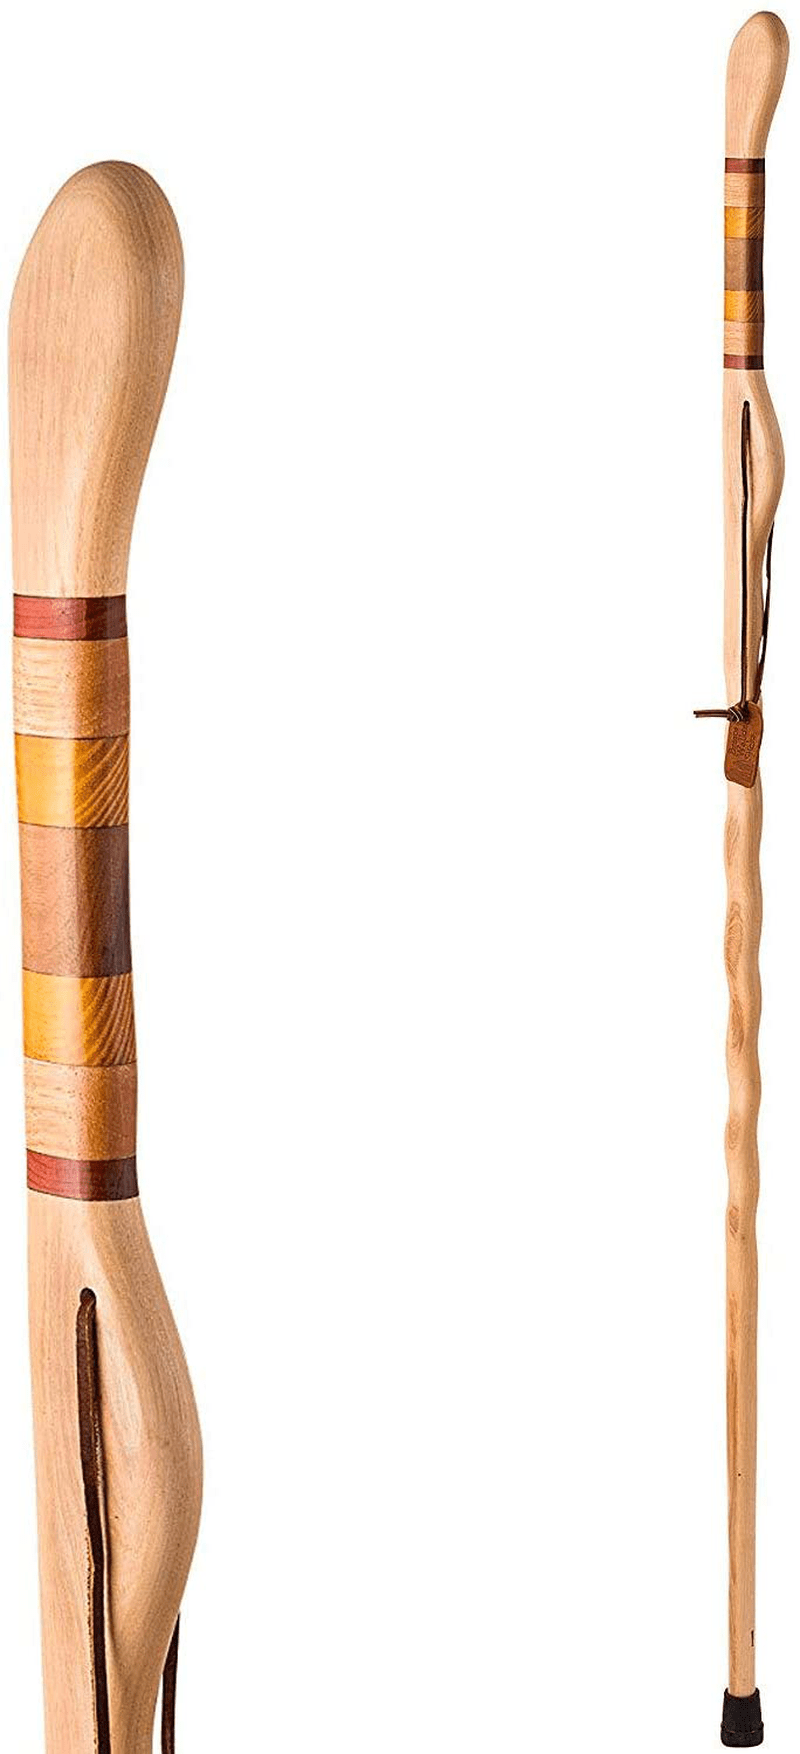 Brazos 48" Hickory Texas Safari Wood Twisted Walking Stick Hiking Trekking Pole, Made in the USA